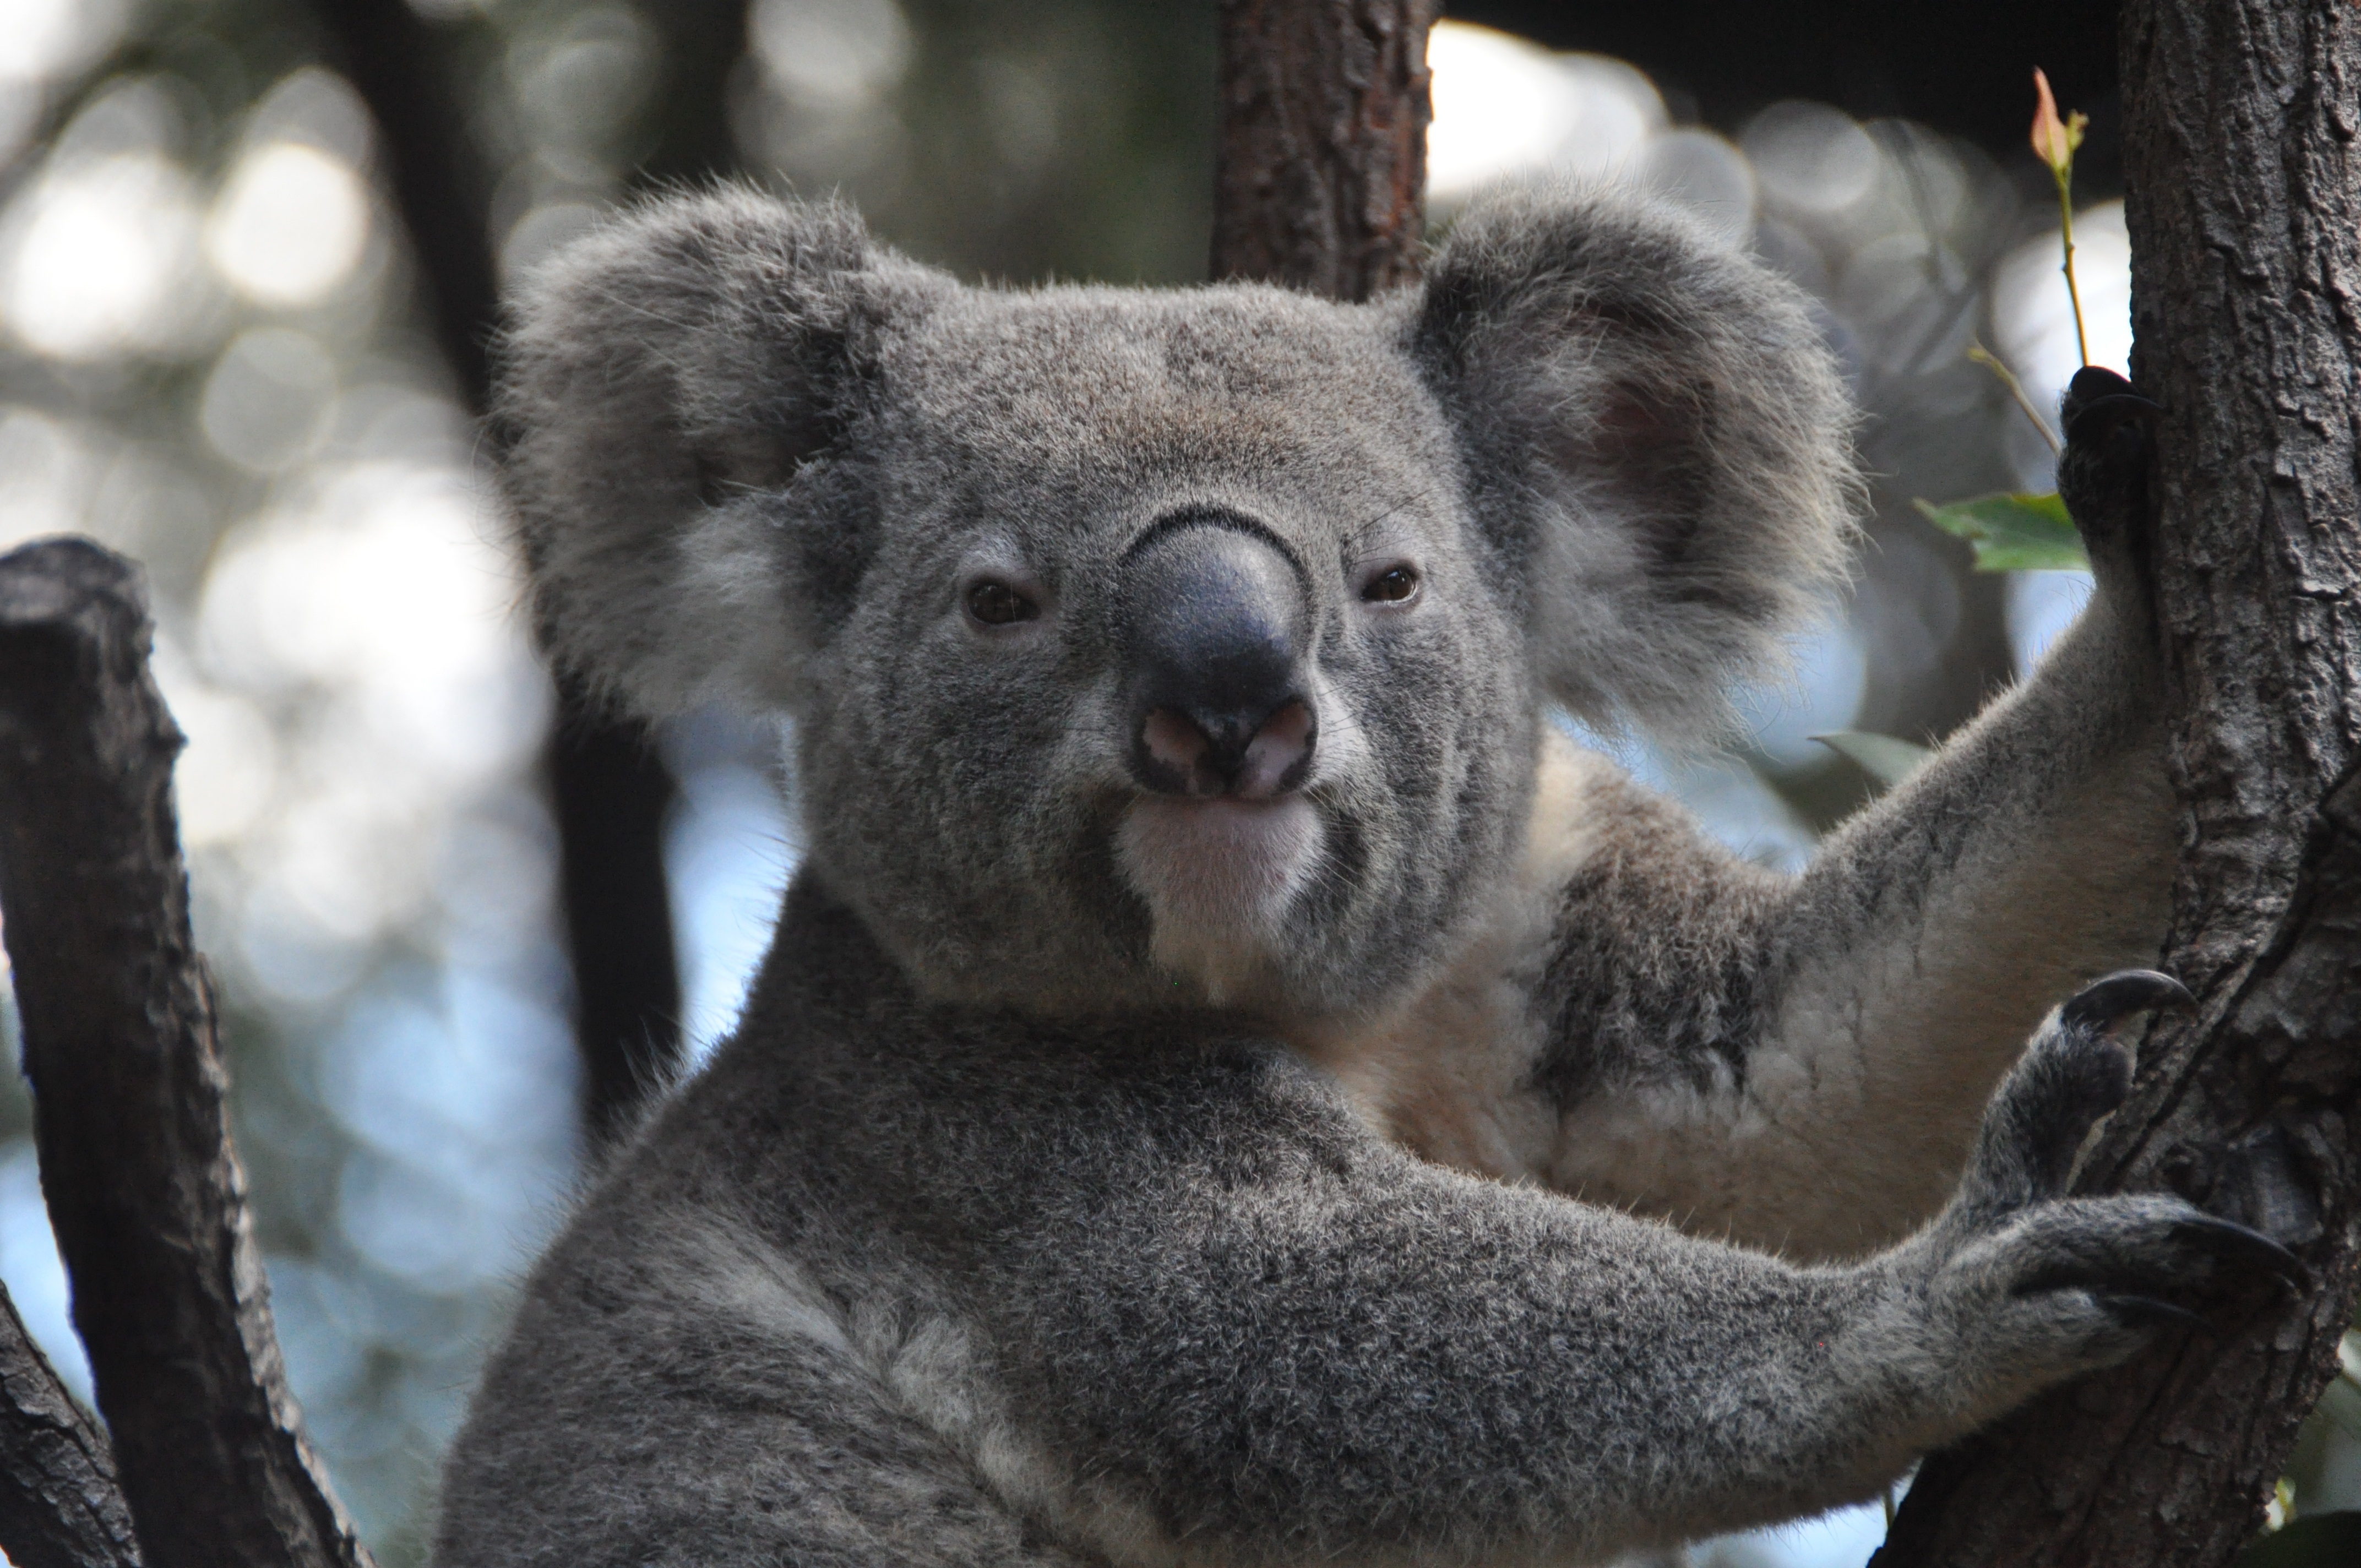 Close-up of a koala bear